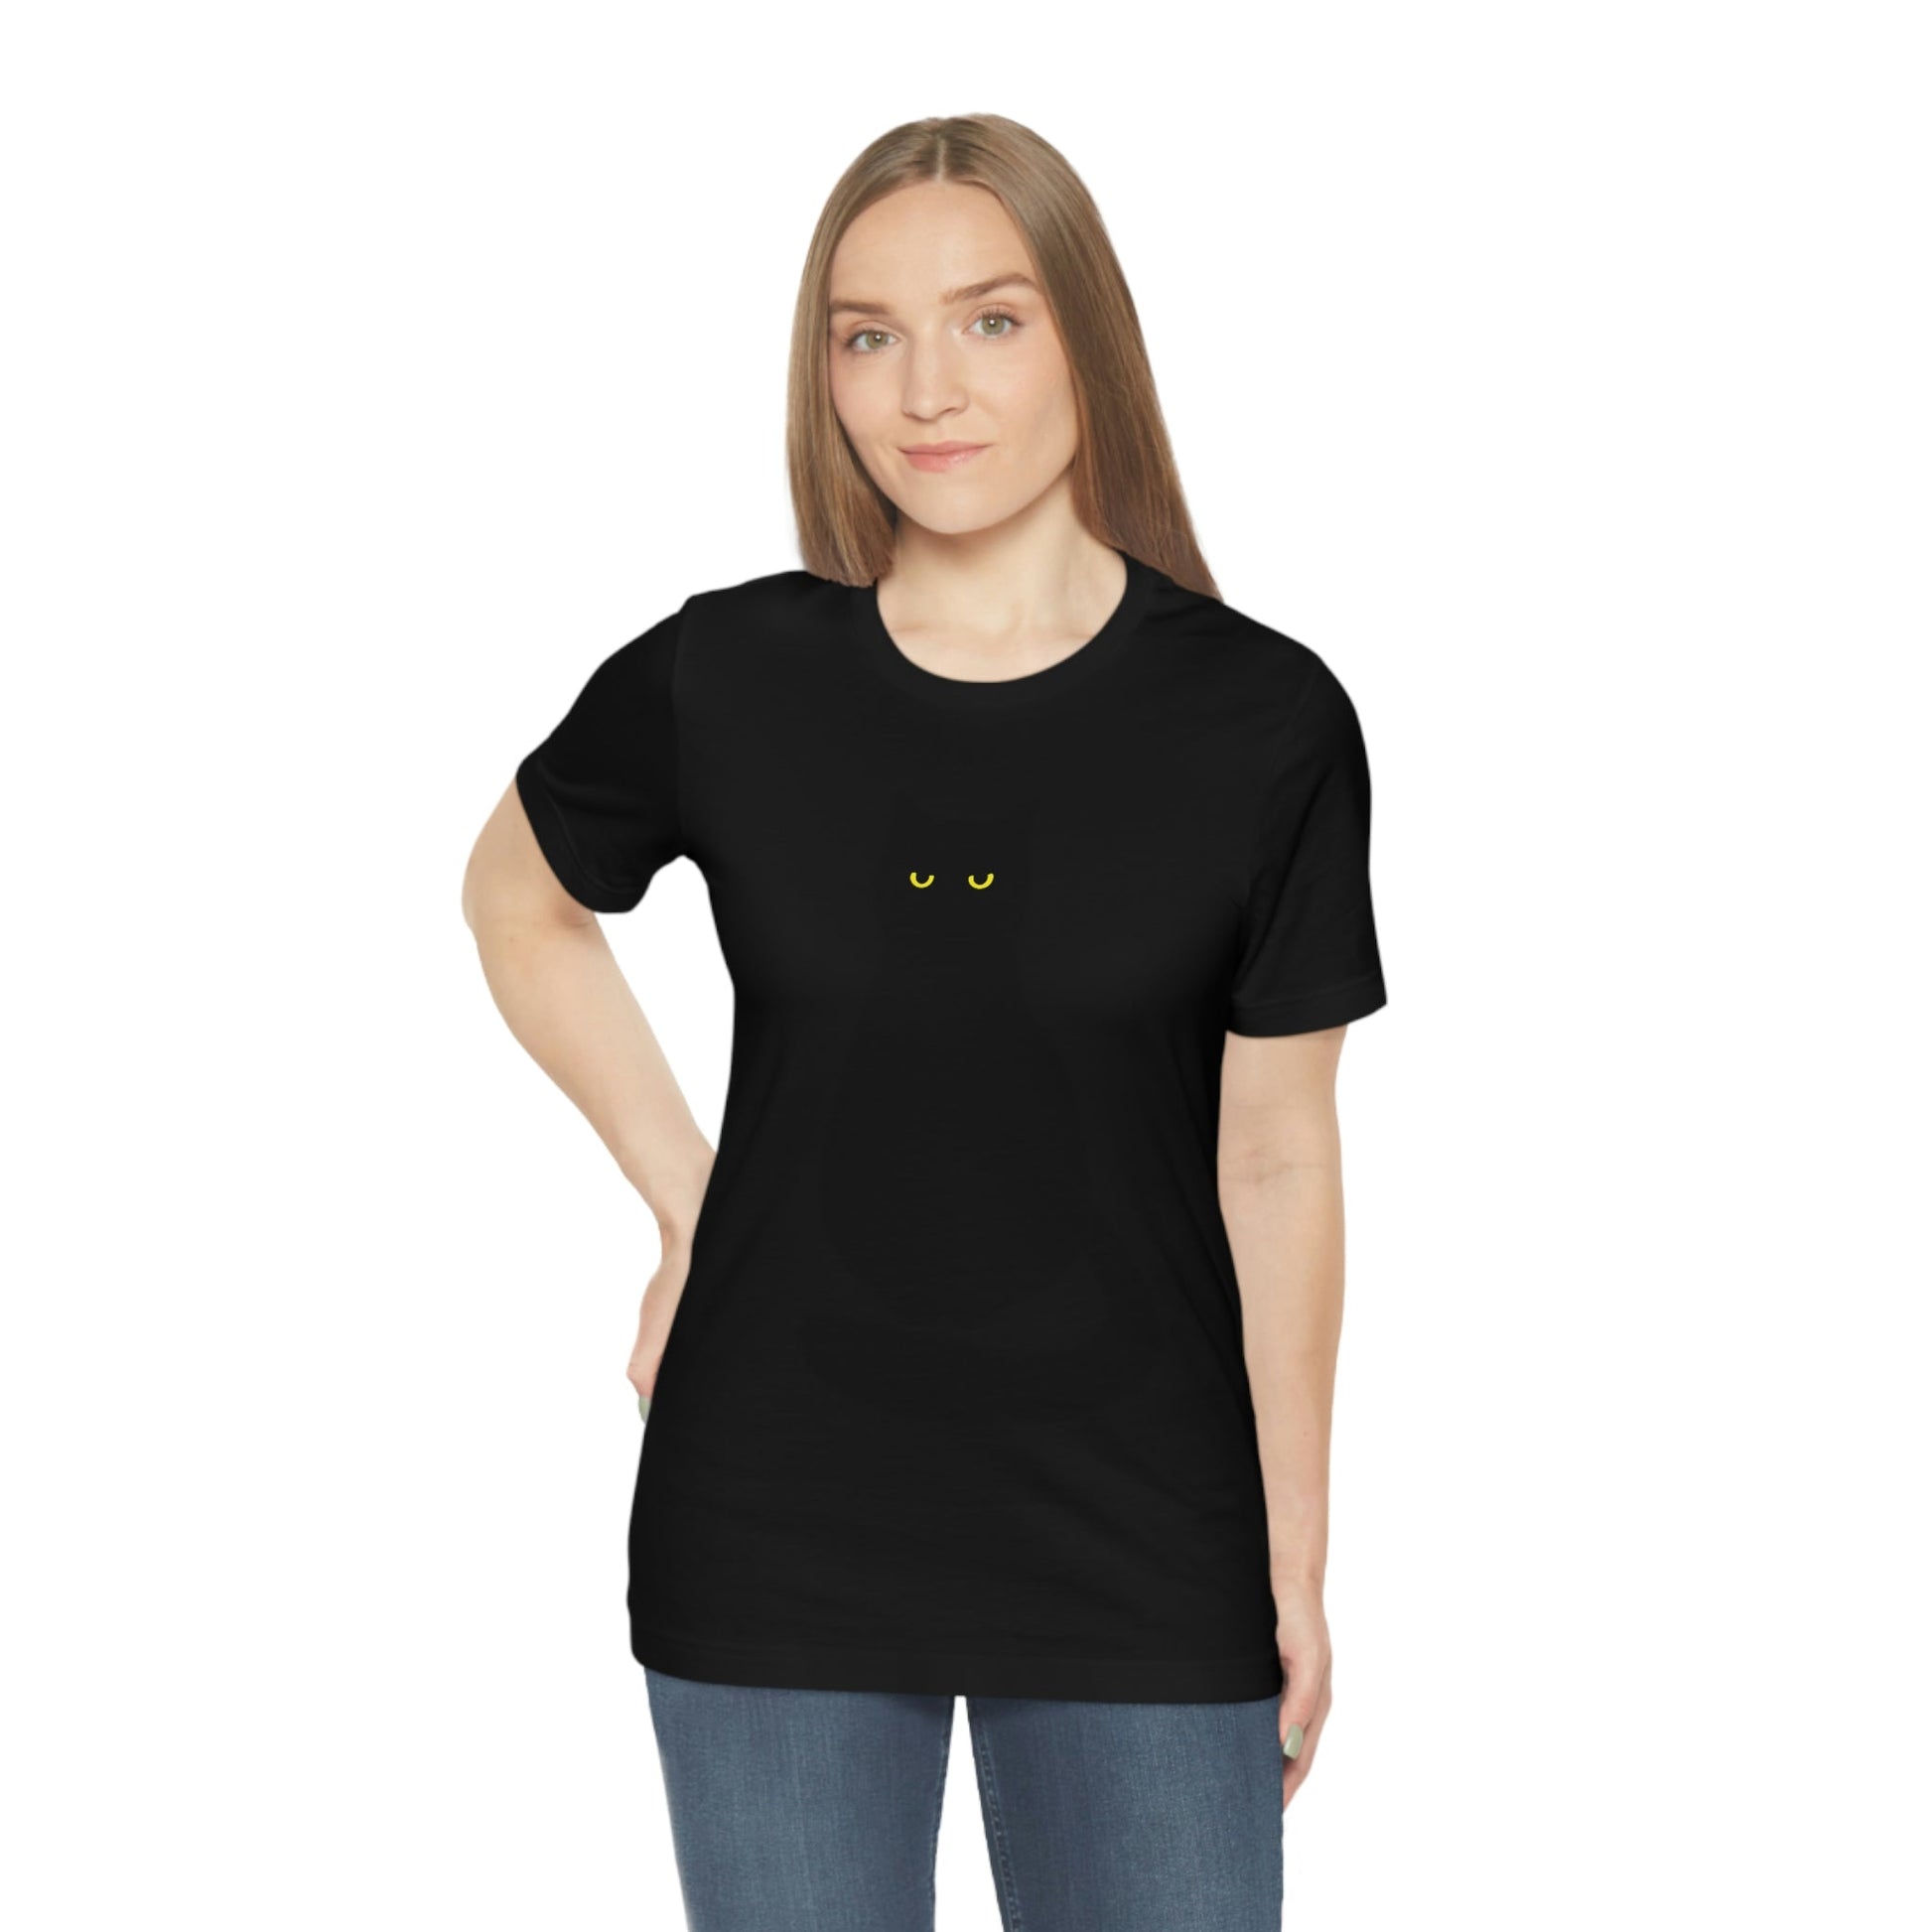 Black Cat with Eyes Animals Kitties Lovers Unisex Jersey Short Sleeve T-Shirt Ichaku [Perfect Gifts Selection]